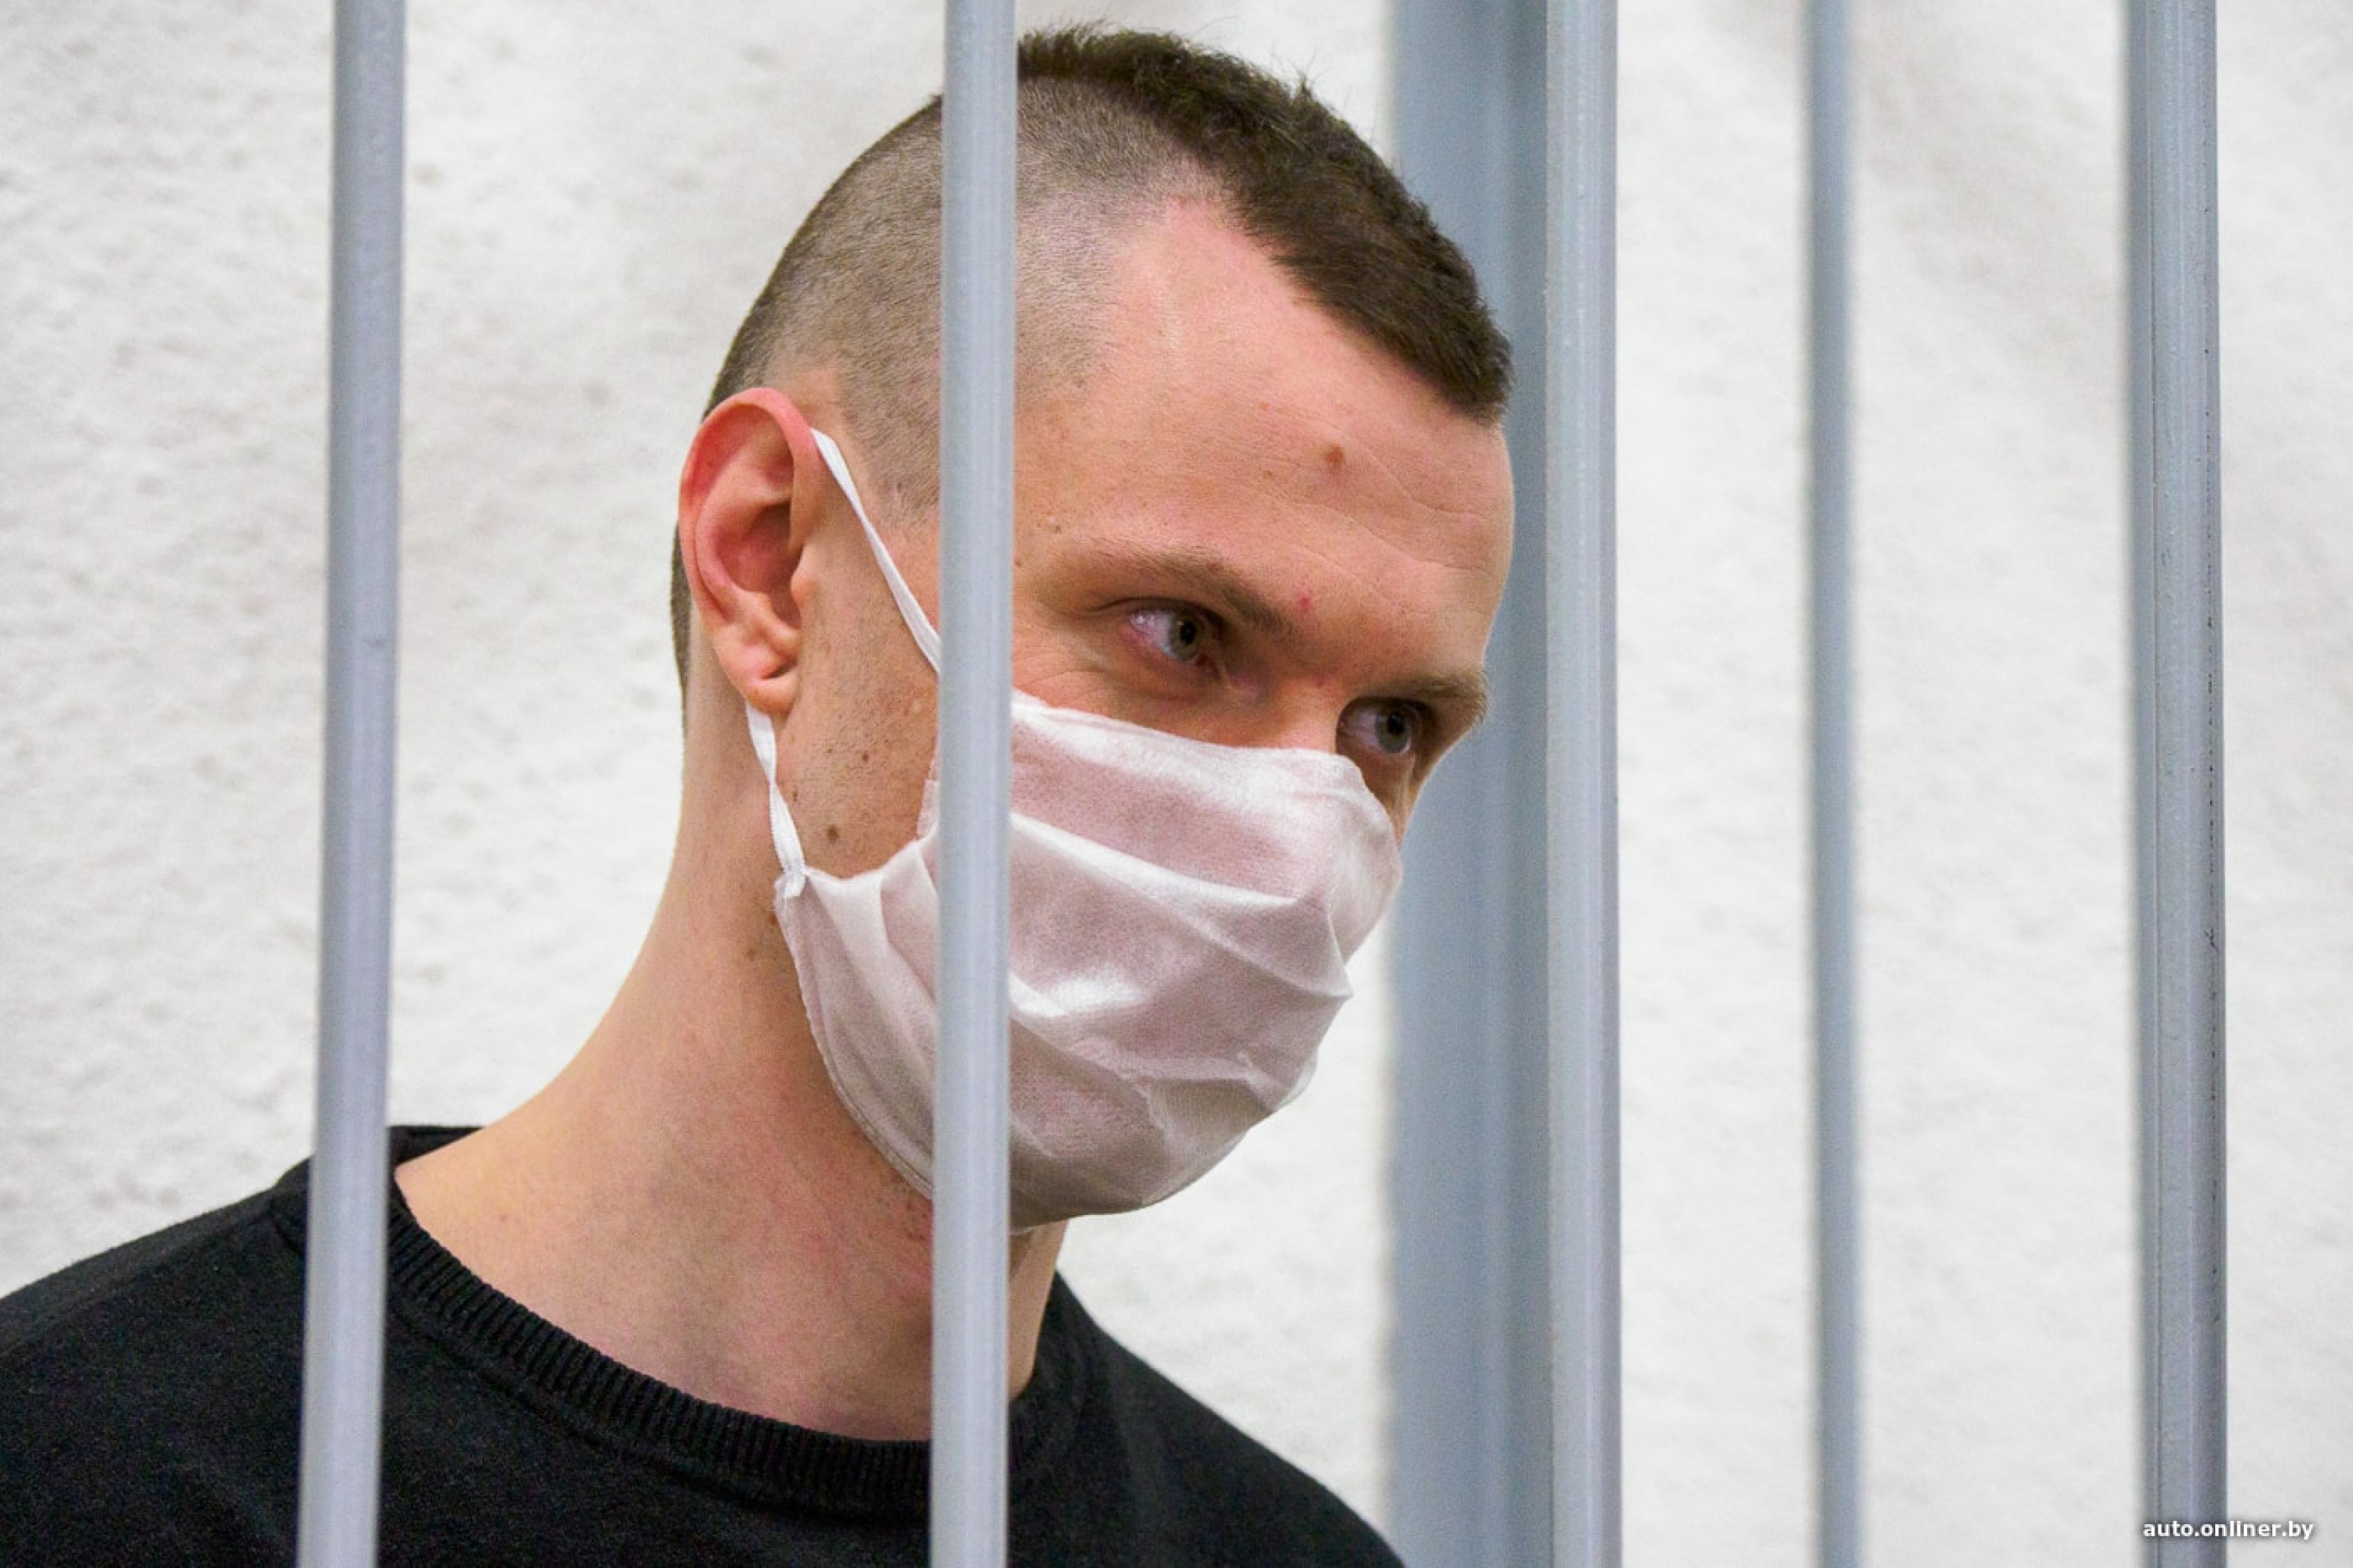 Дмитрий Дубков в суде. Фото: auto.onliner.by